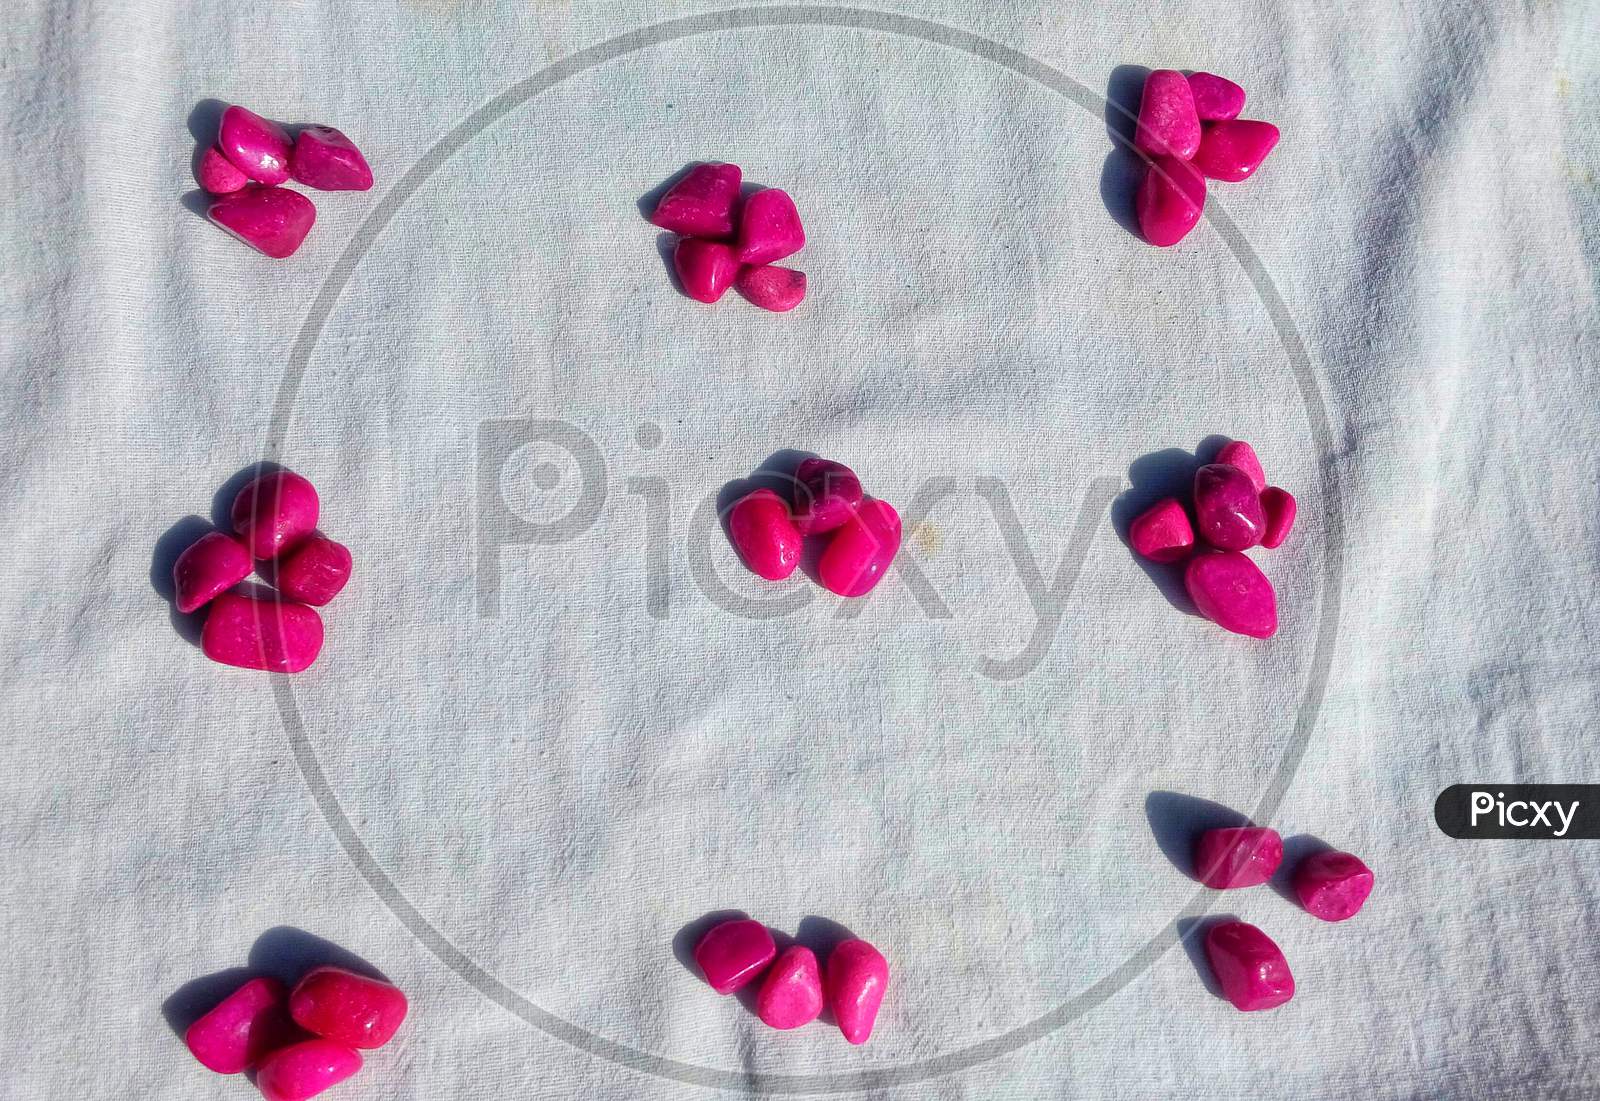 Pink color pebbles